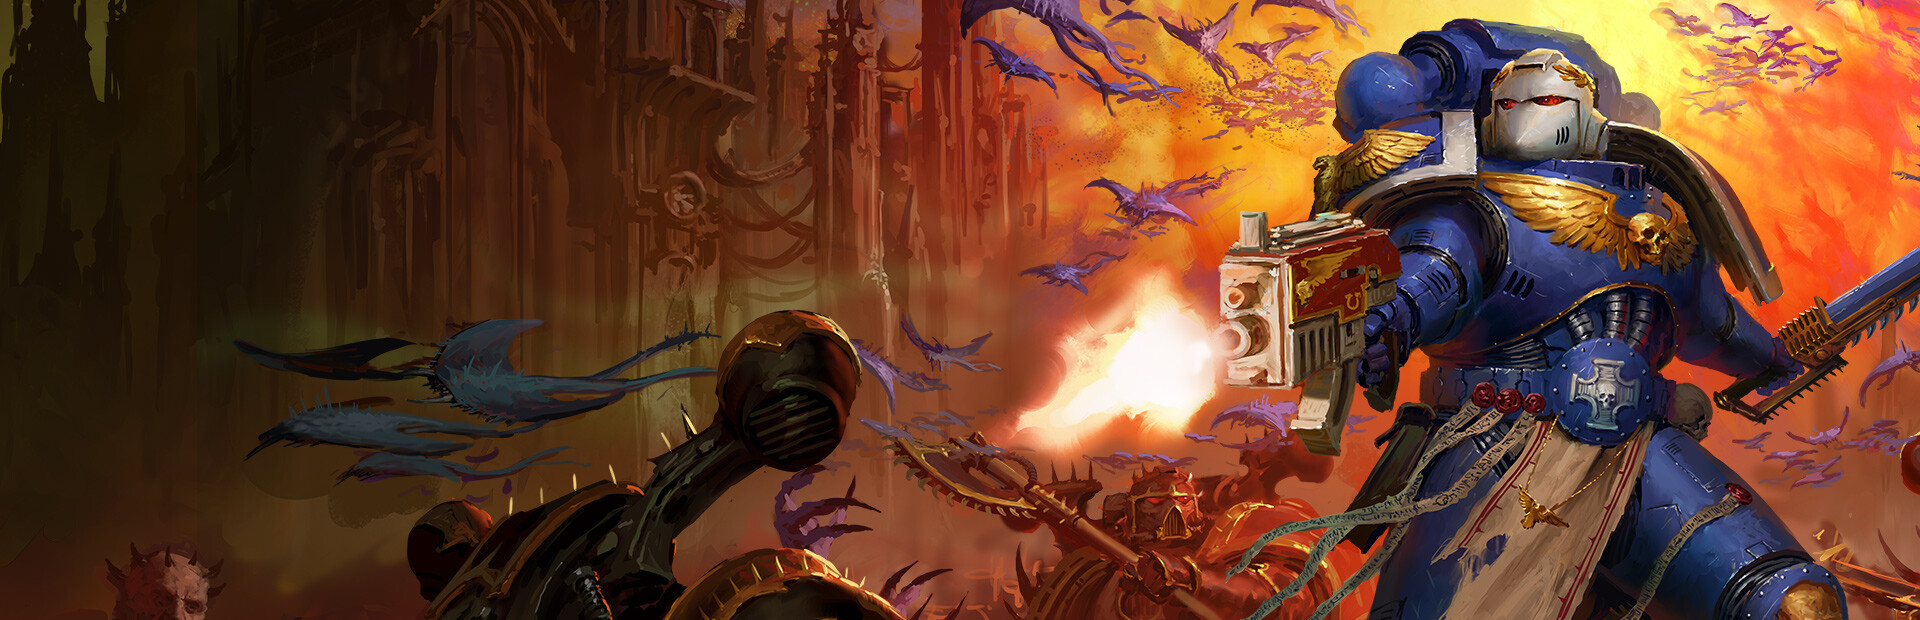 Warhammer 40,000: Boltgun cover image